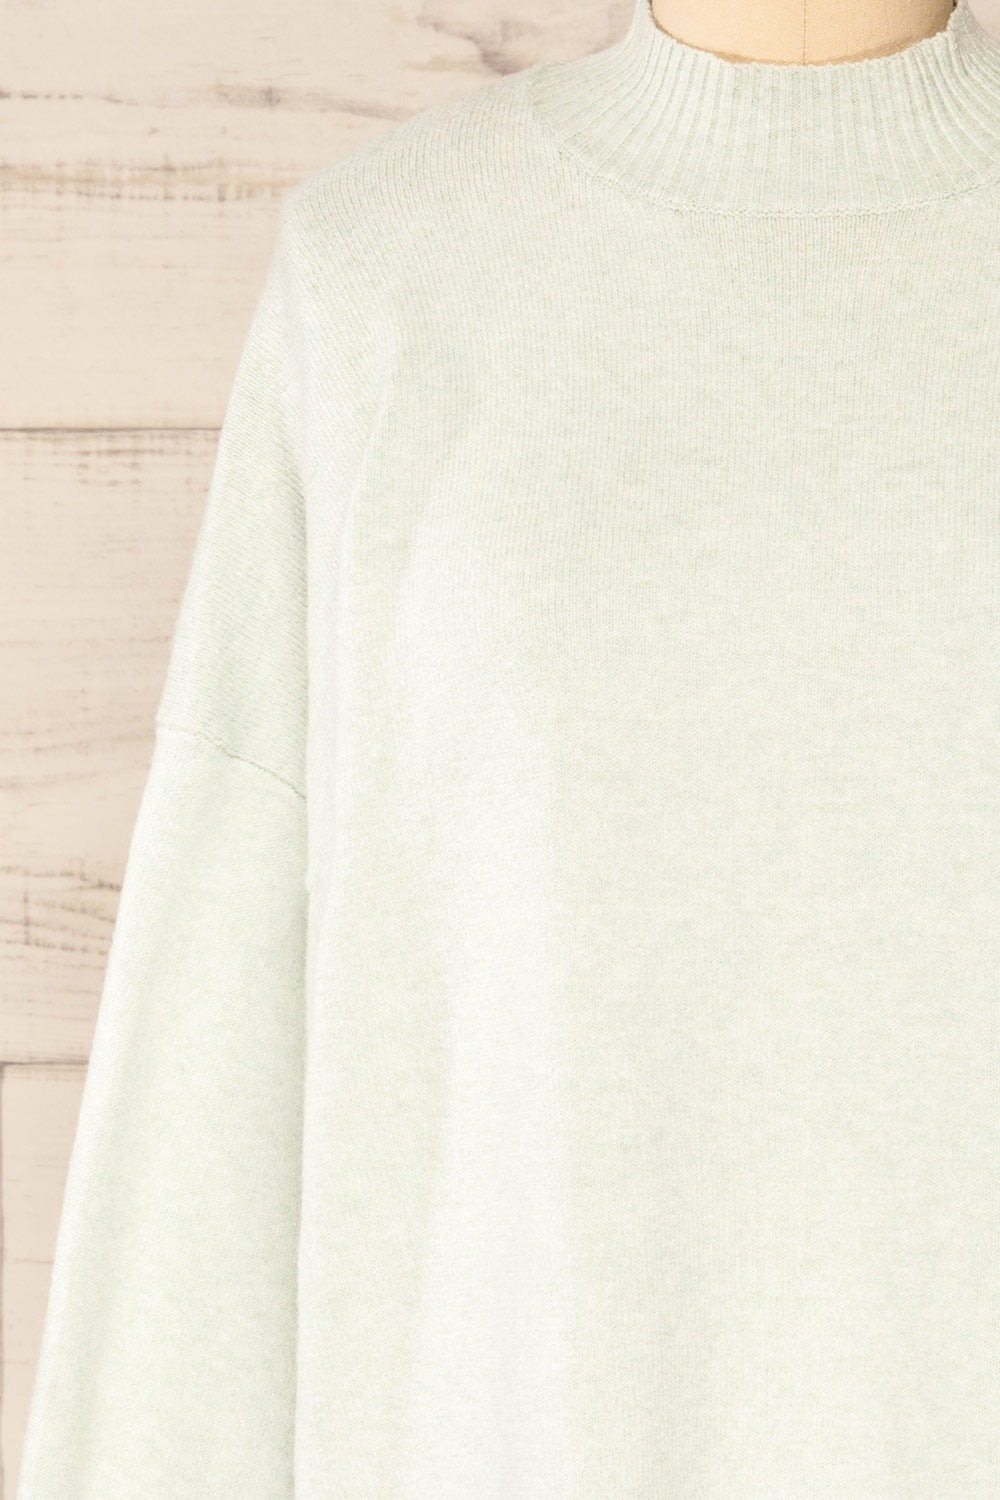 Eris Green Mock Neck Sweater | La petite garçonne front close-up